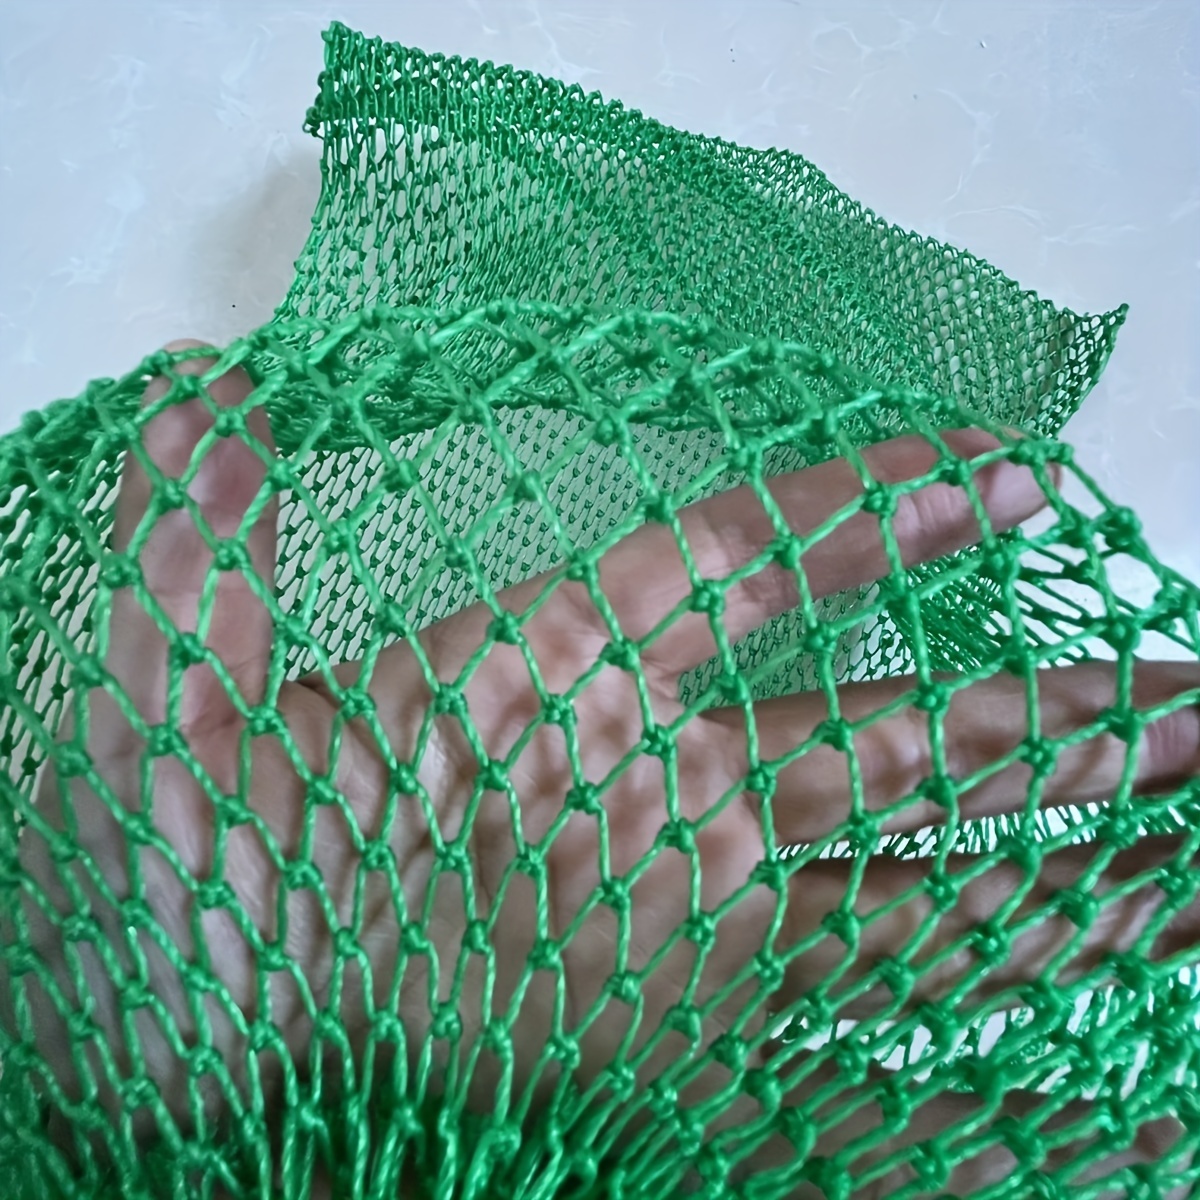 Fishing Accessories Fishing Tackle Green Fishing Net Folding Small Grid  Live Fish Nets Nylon Mesh Bag Fish Nets Bag Mesh Bag - AliExpress